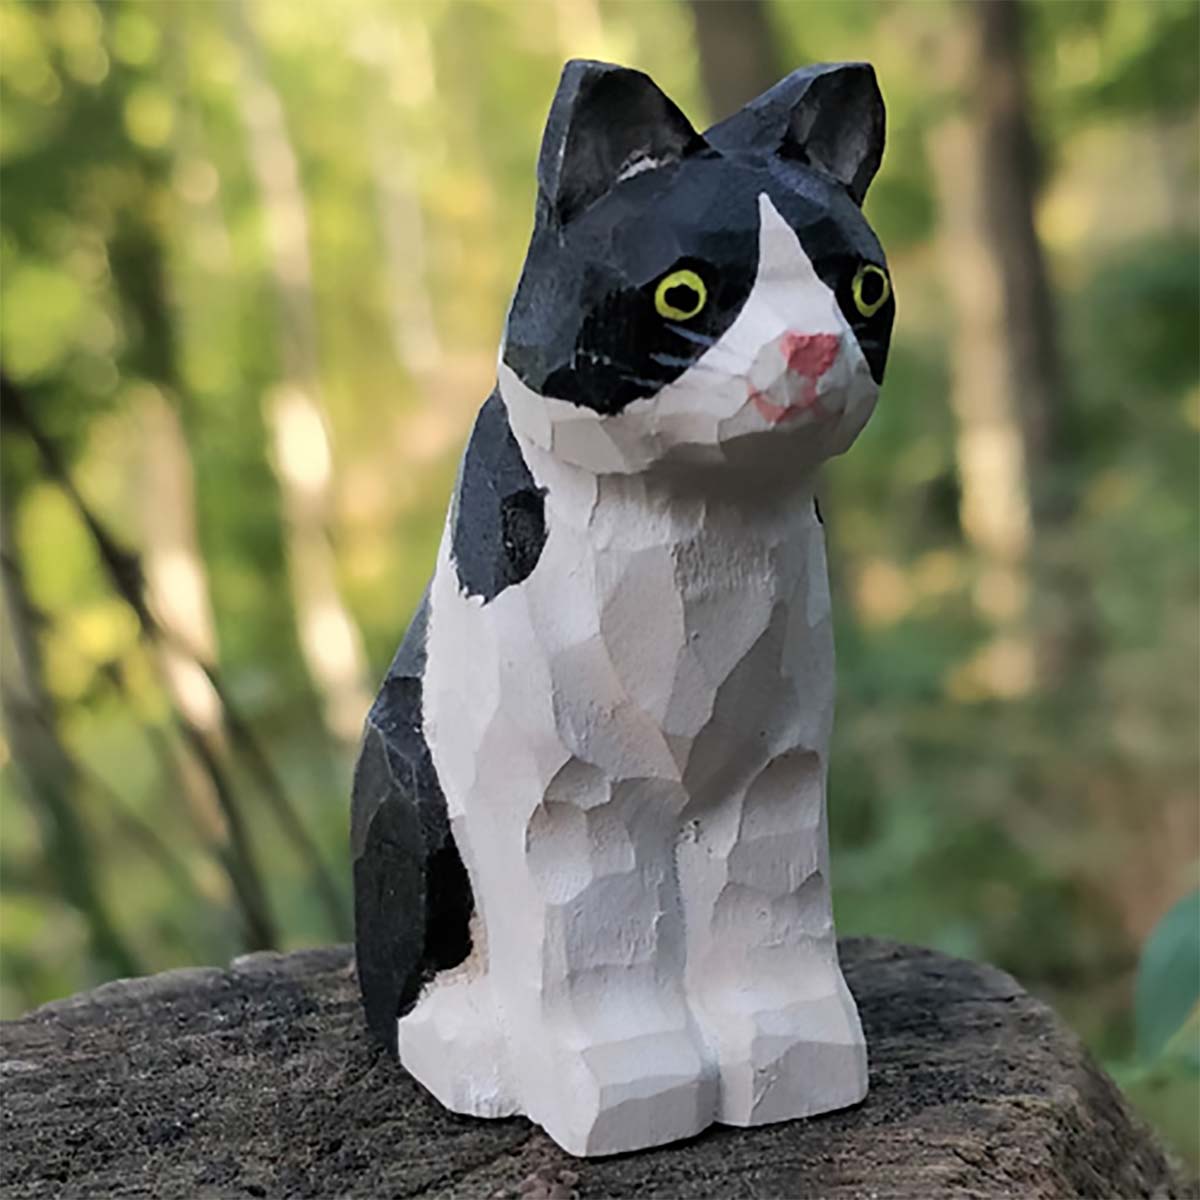 Wudimals Wooden Animal - Black & White Cat